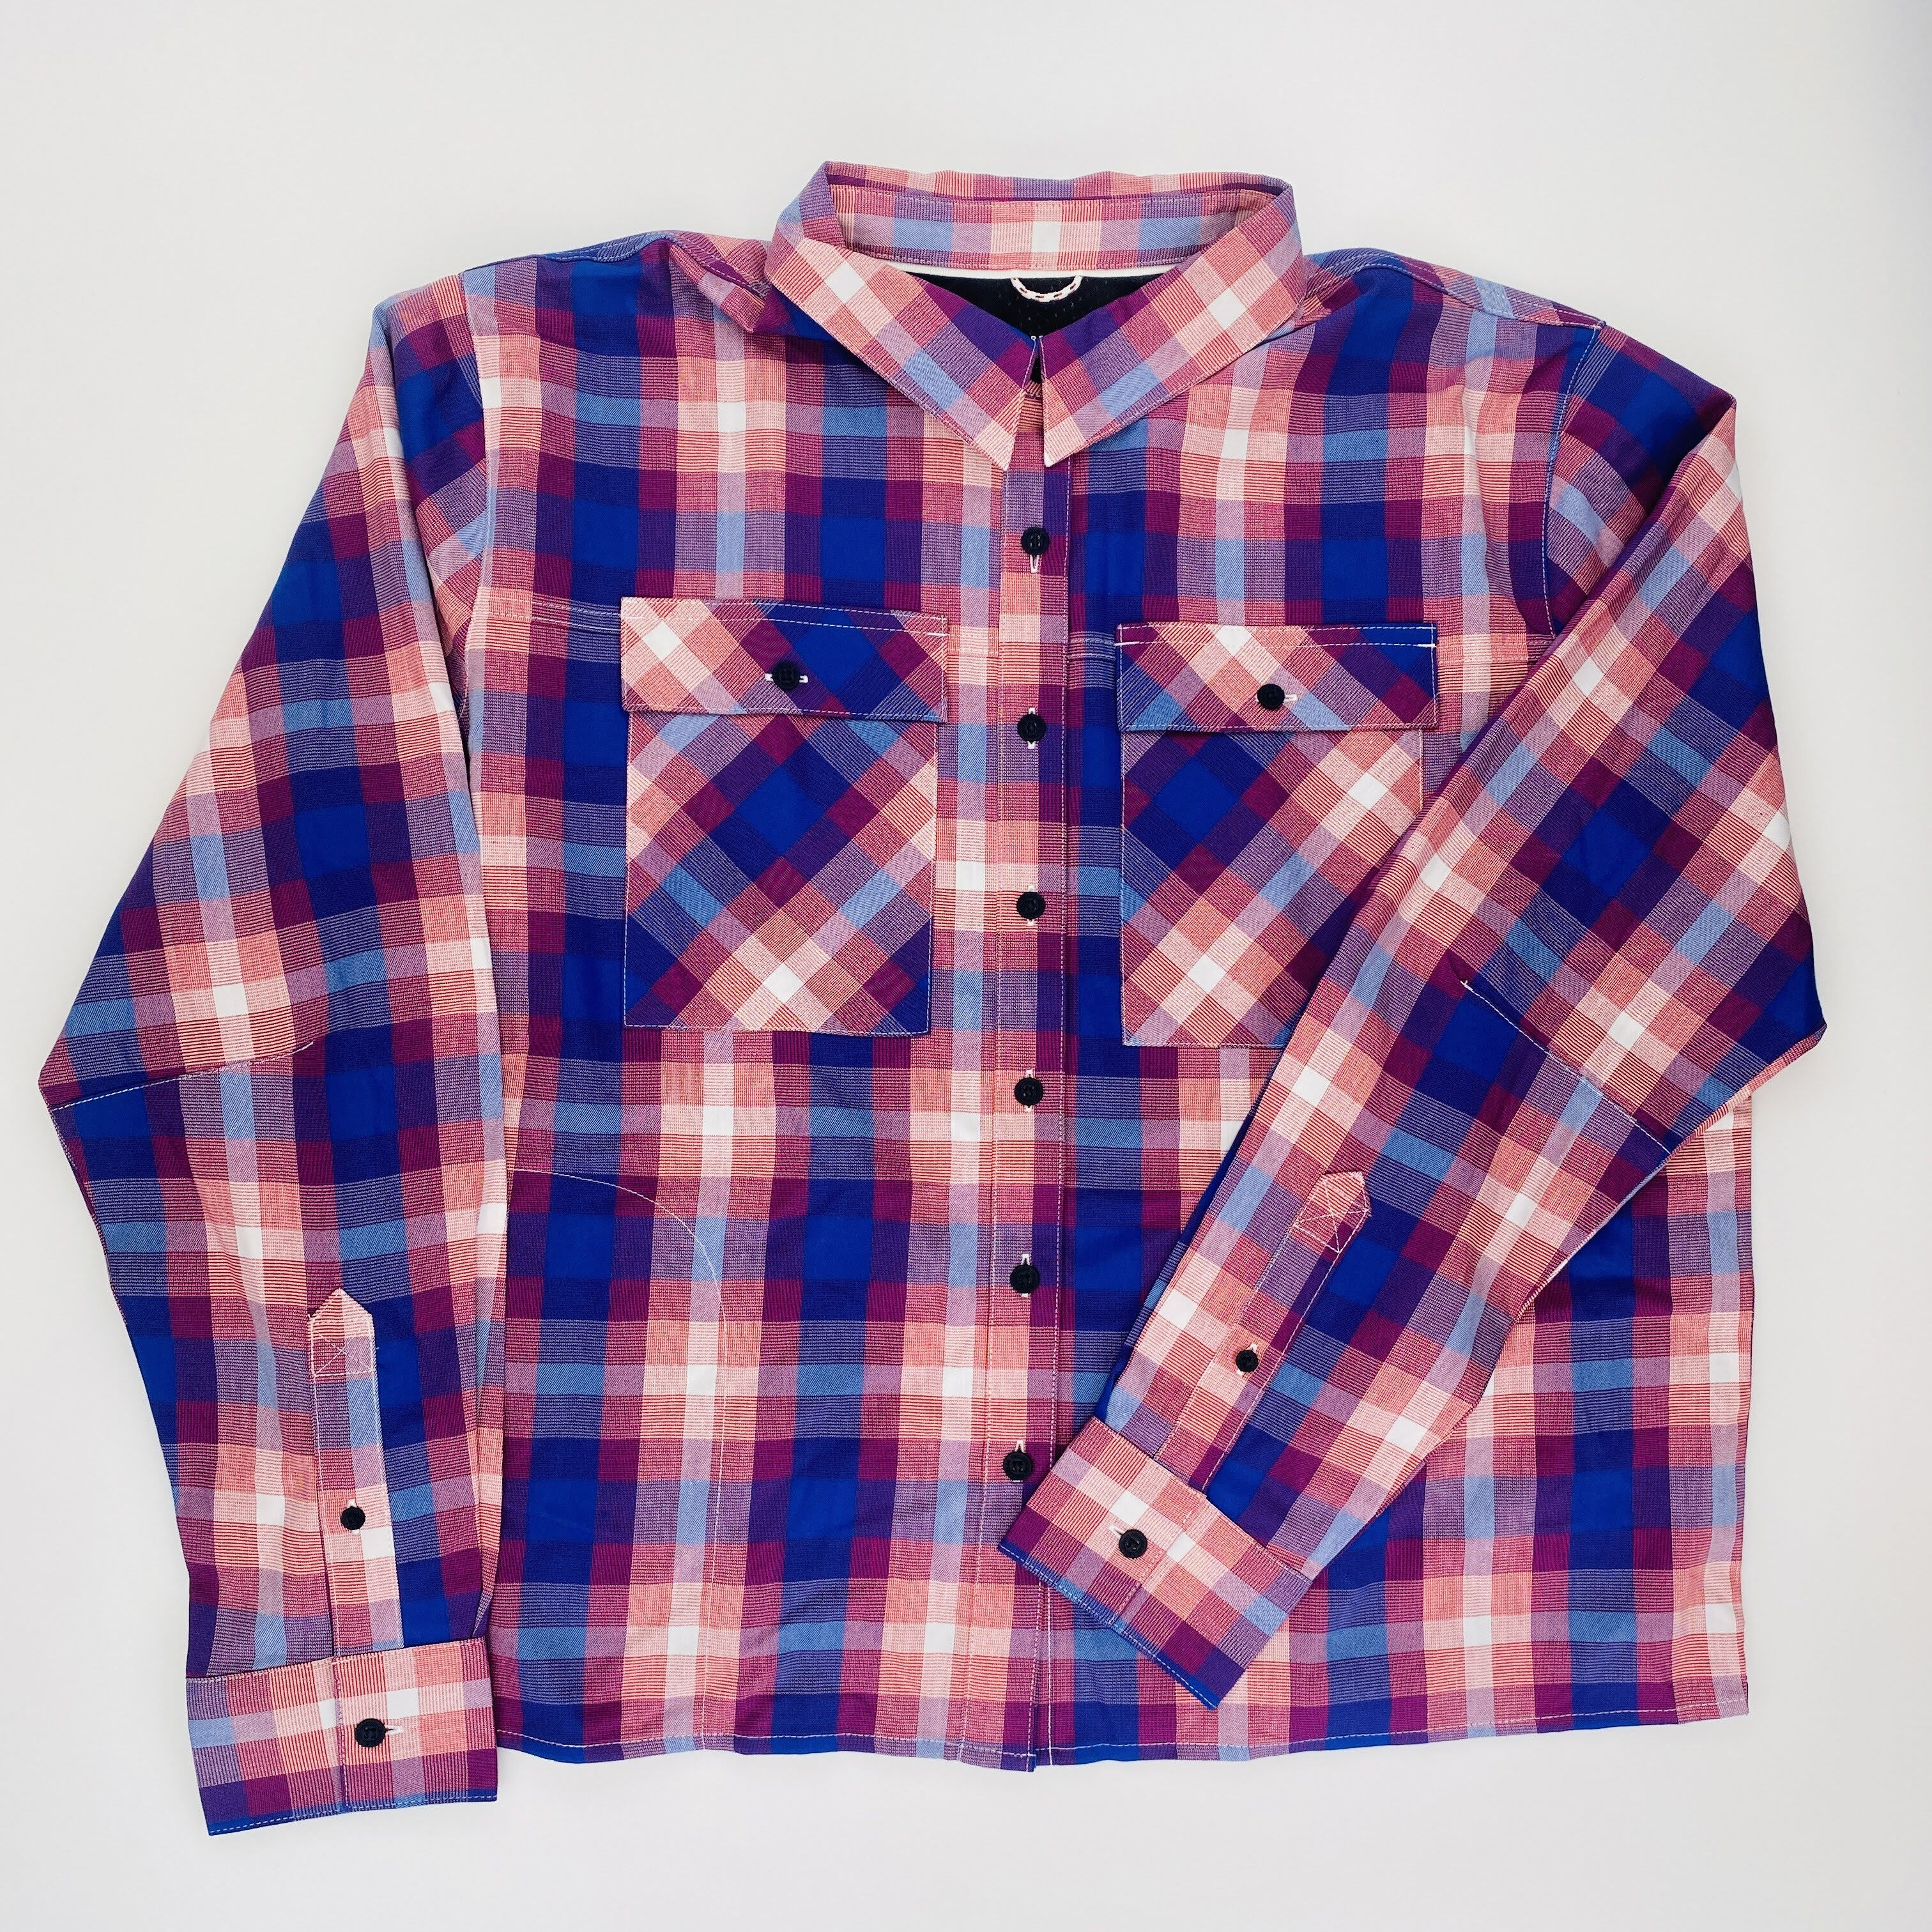 Wrangler Ls Boxy Shirt - Seconde main Chemise femme - Multicolore - S | Hardloop